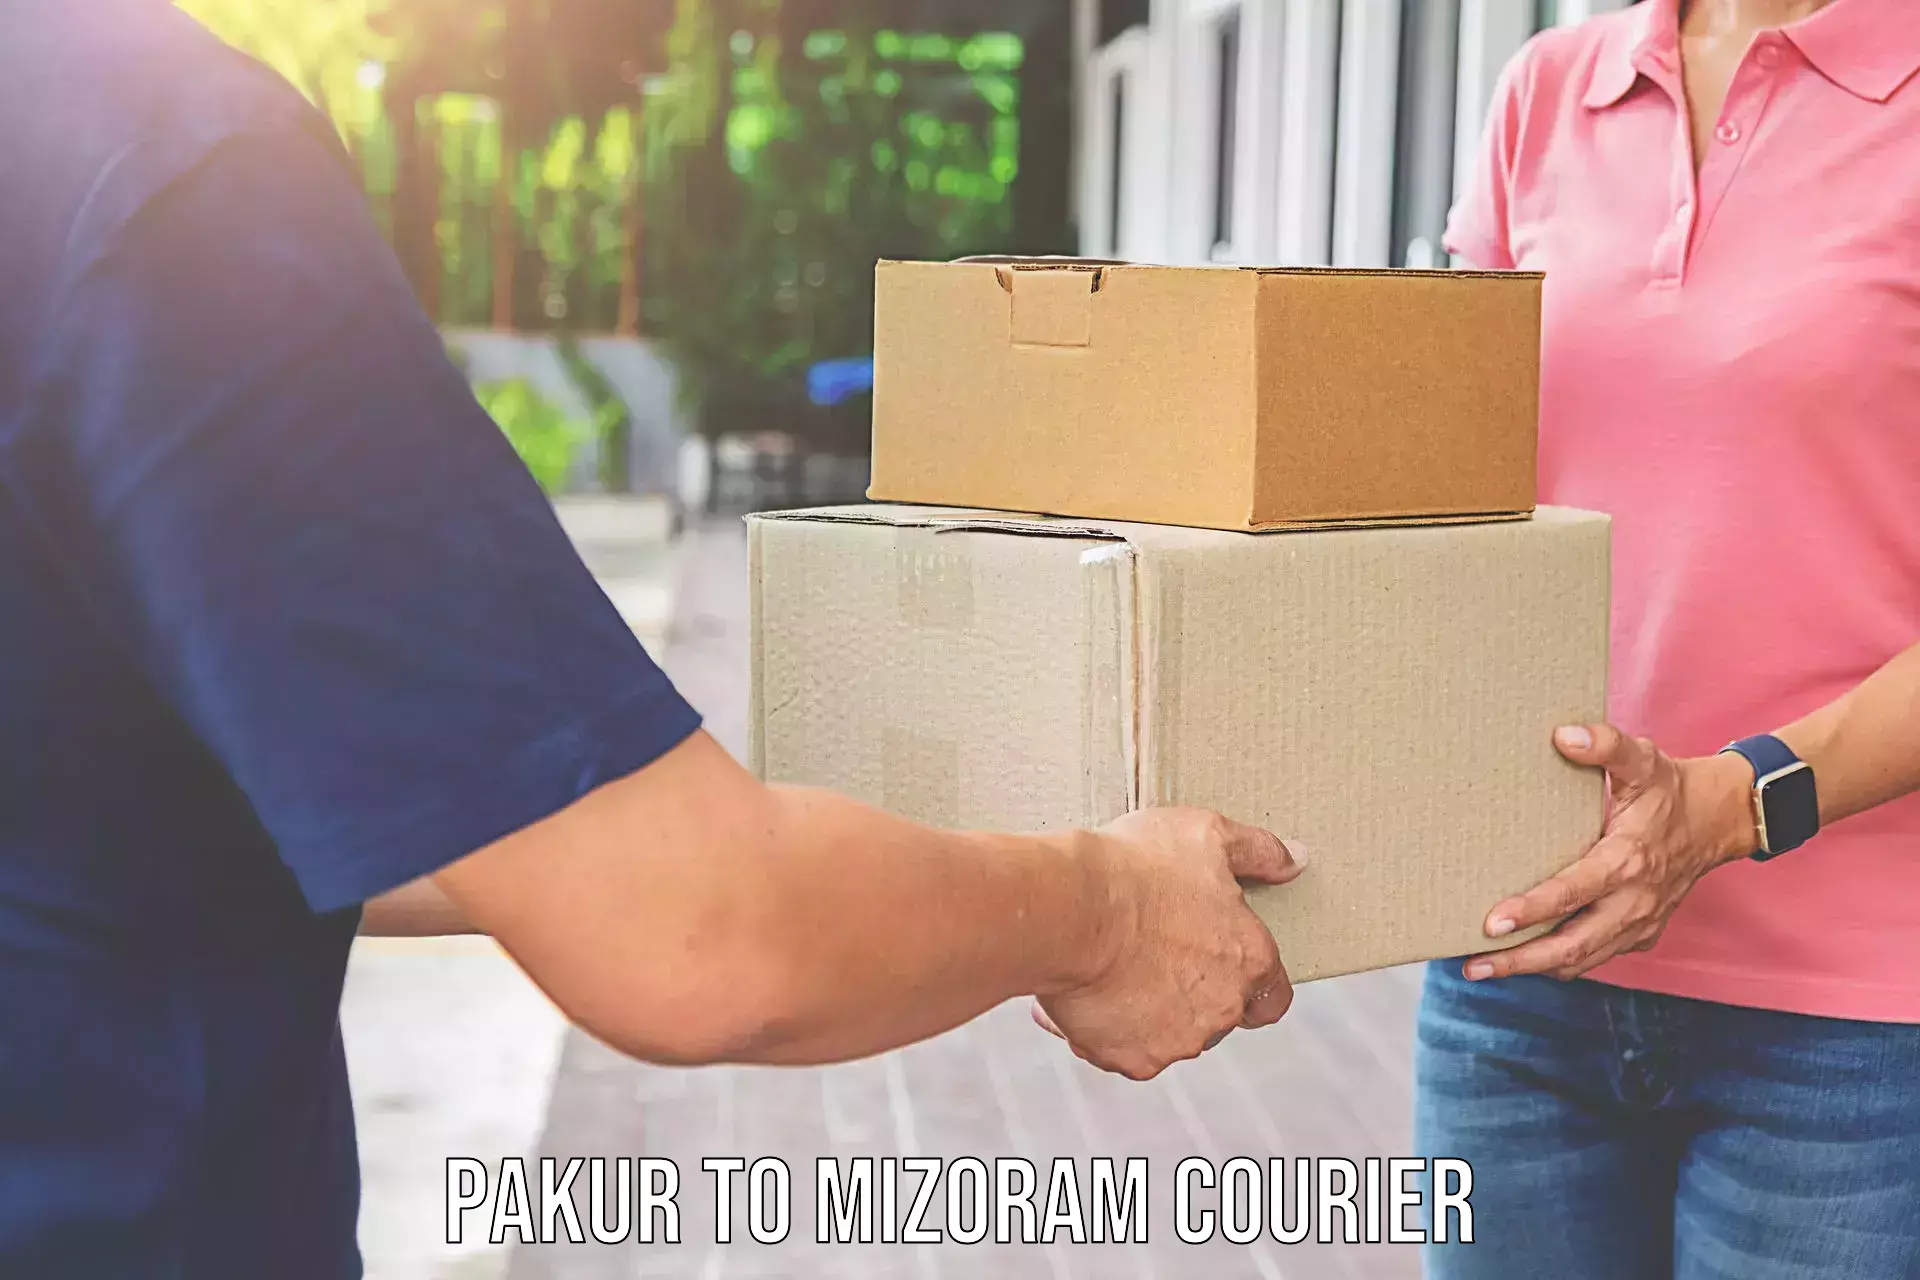 Furniture delivery service Pakur to Aizawl